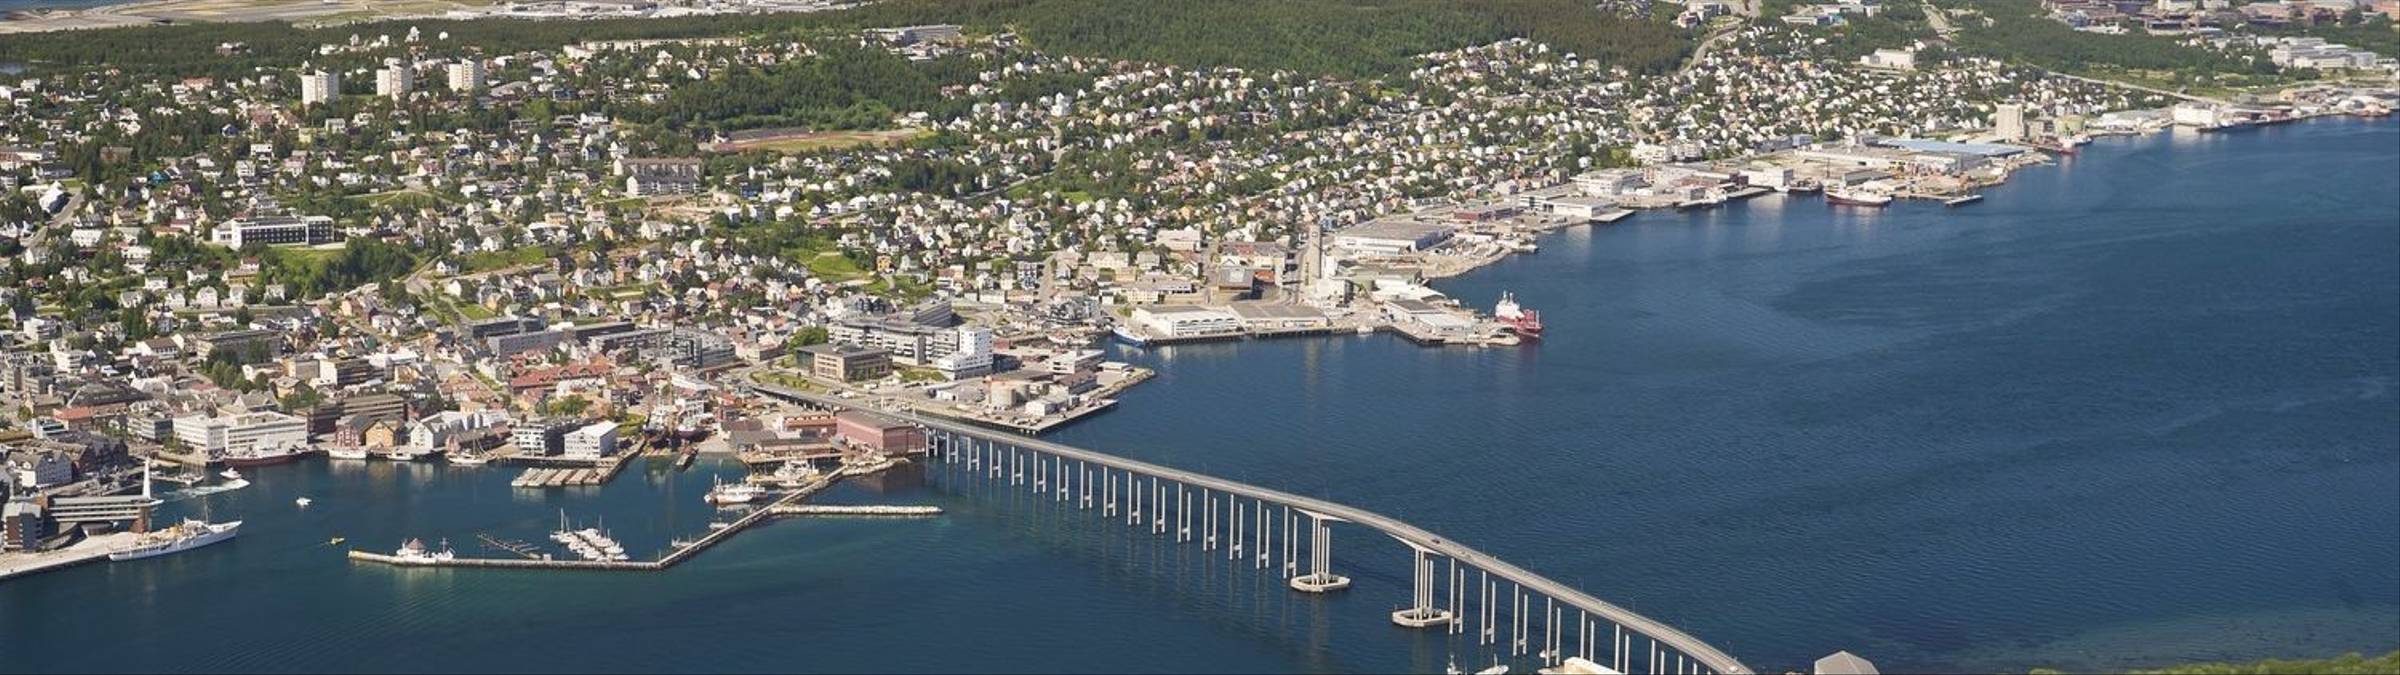 The-city-of-Tromso-082011-99-0128-1500.jpg